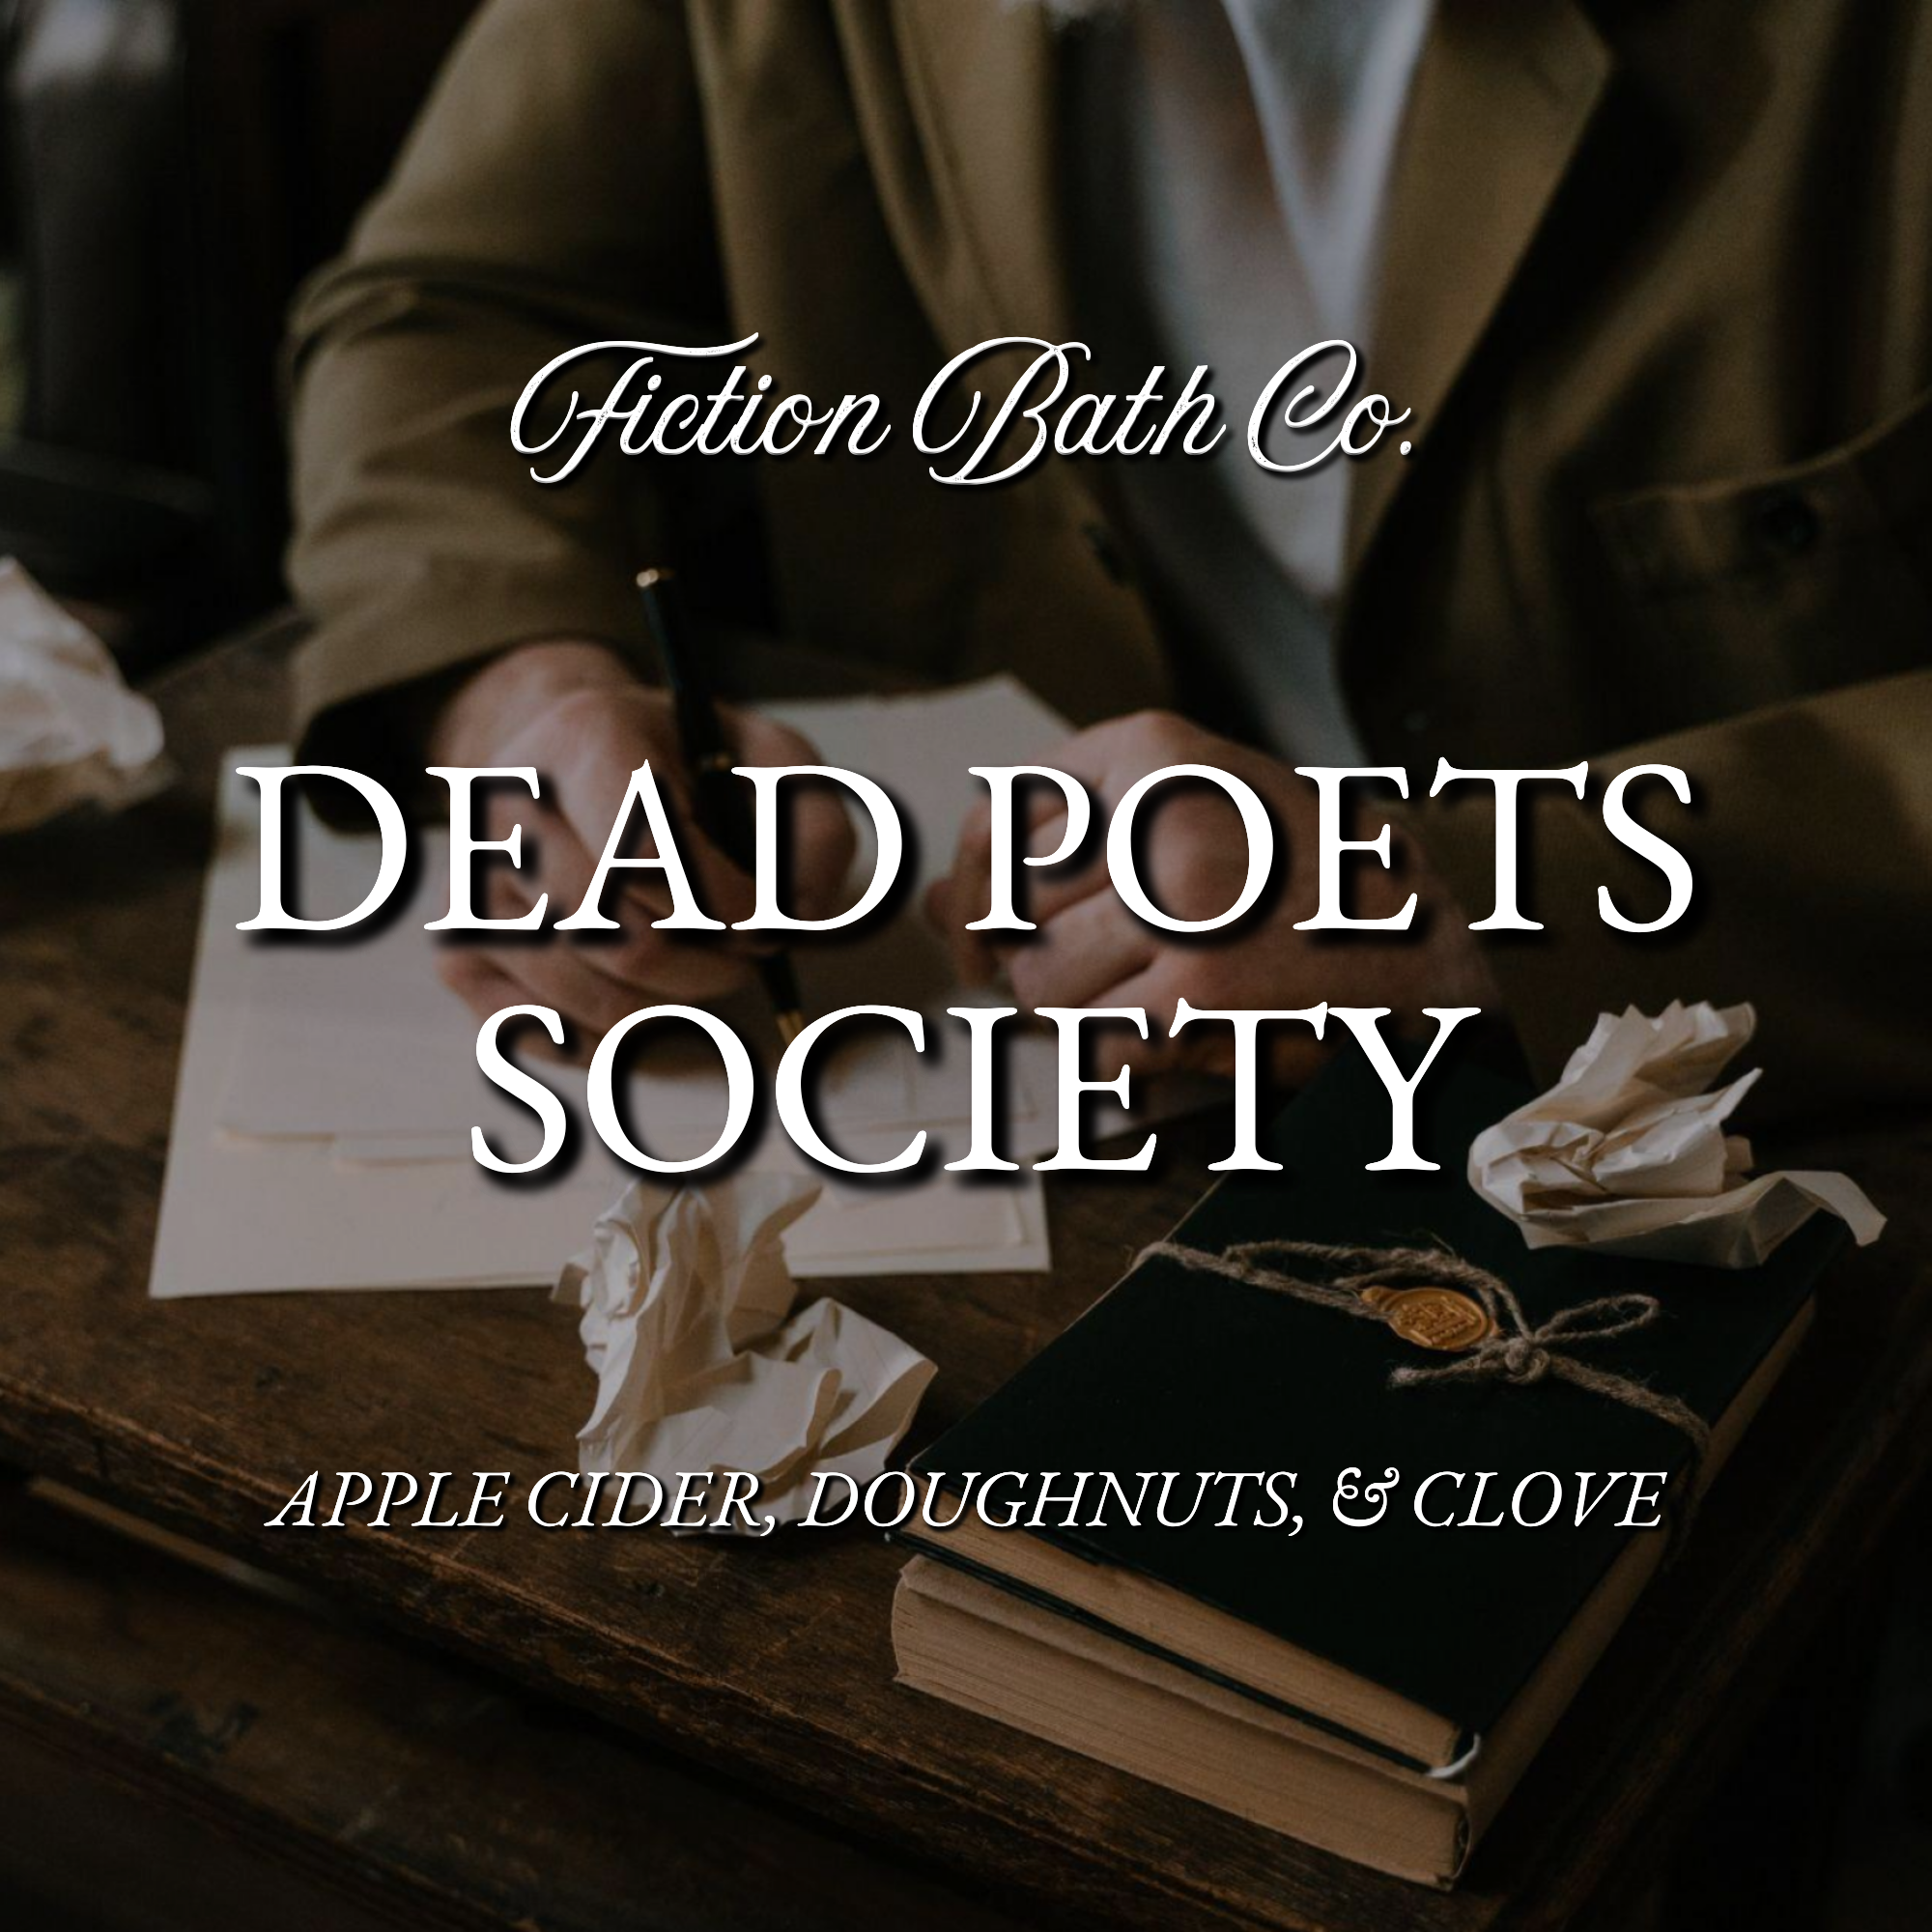 DEAD POETS SOCIETY – Fiction Bath Co.